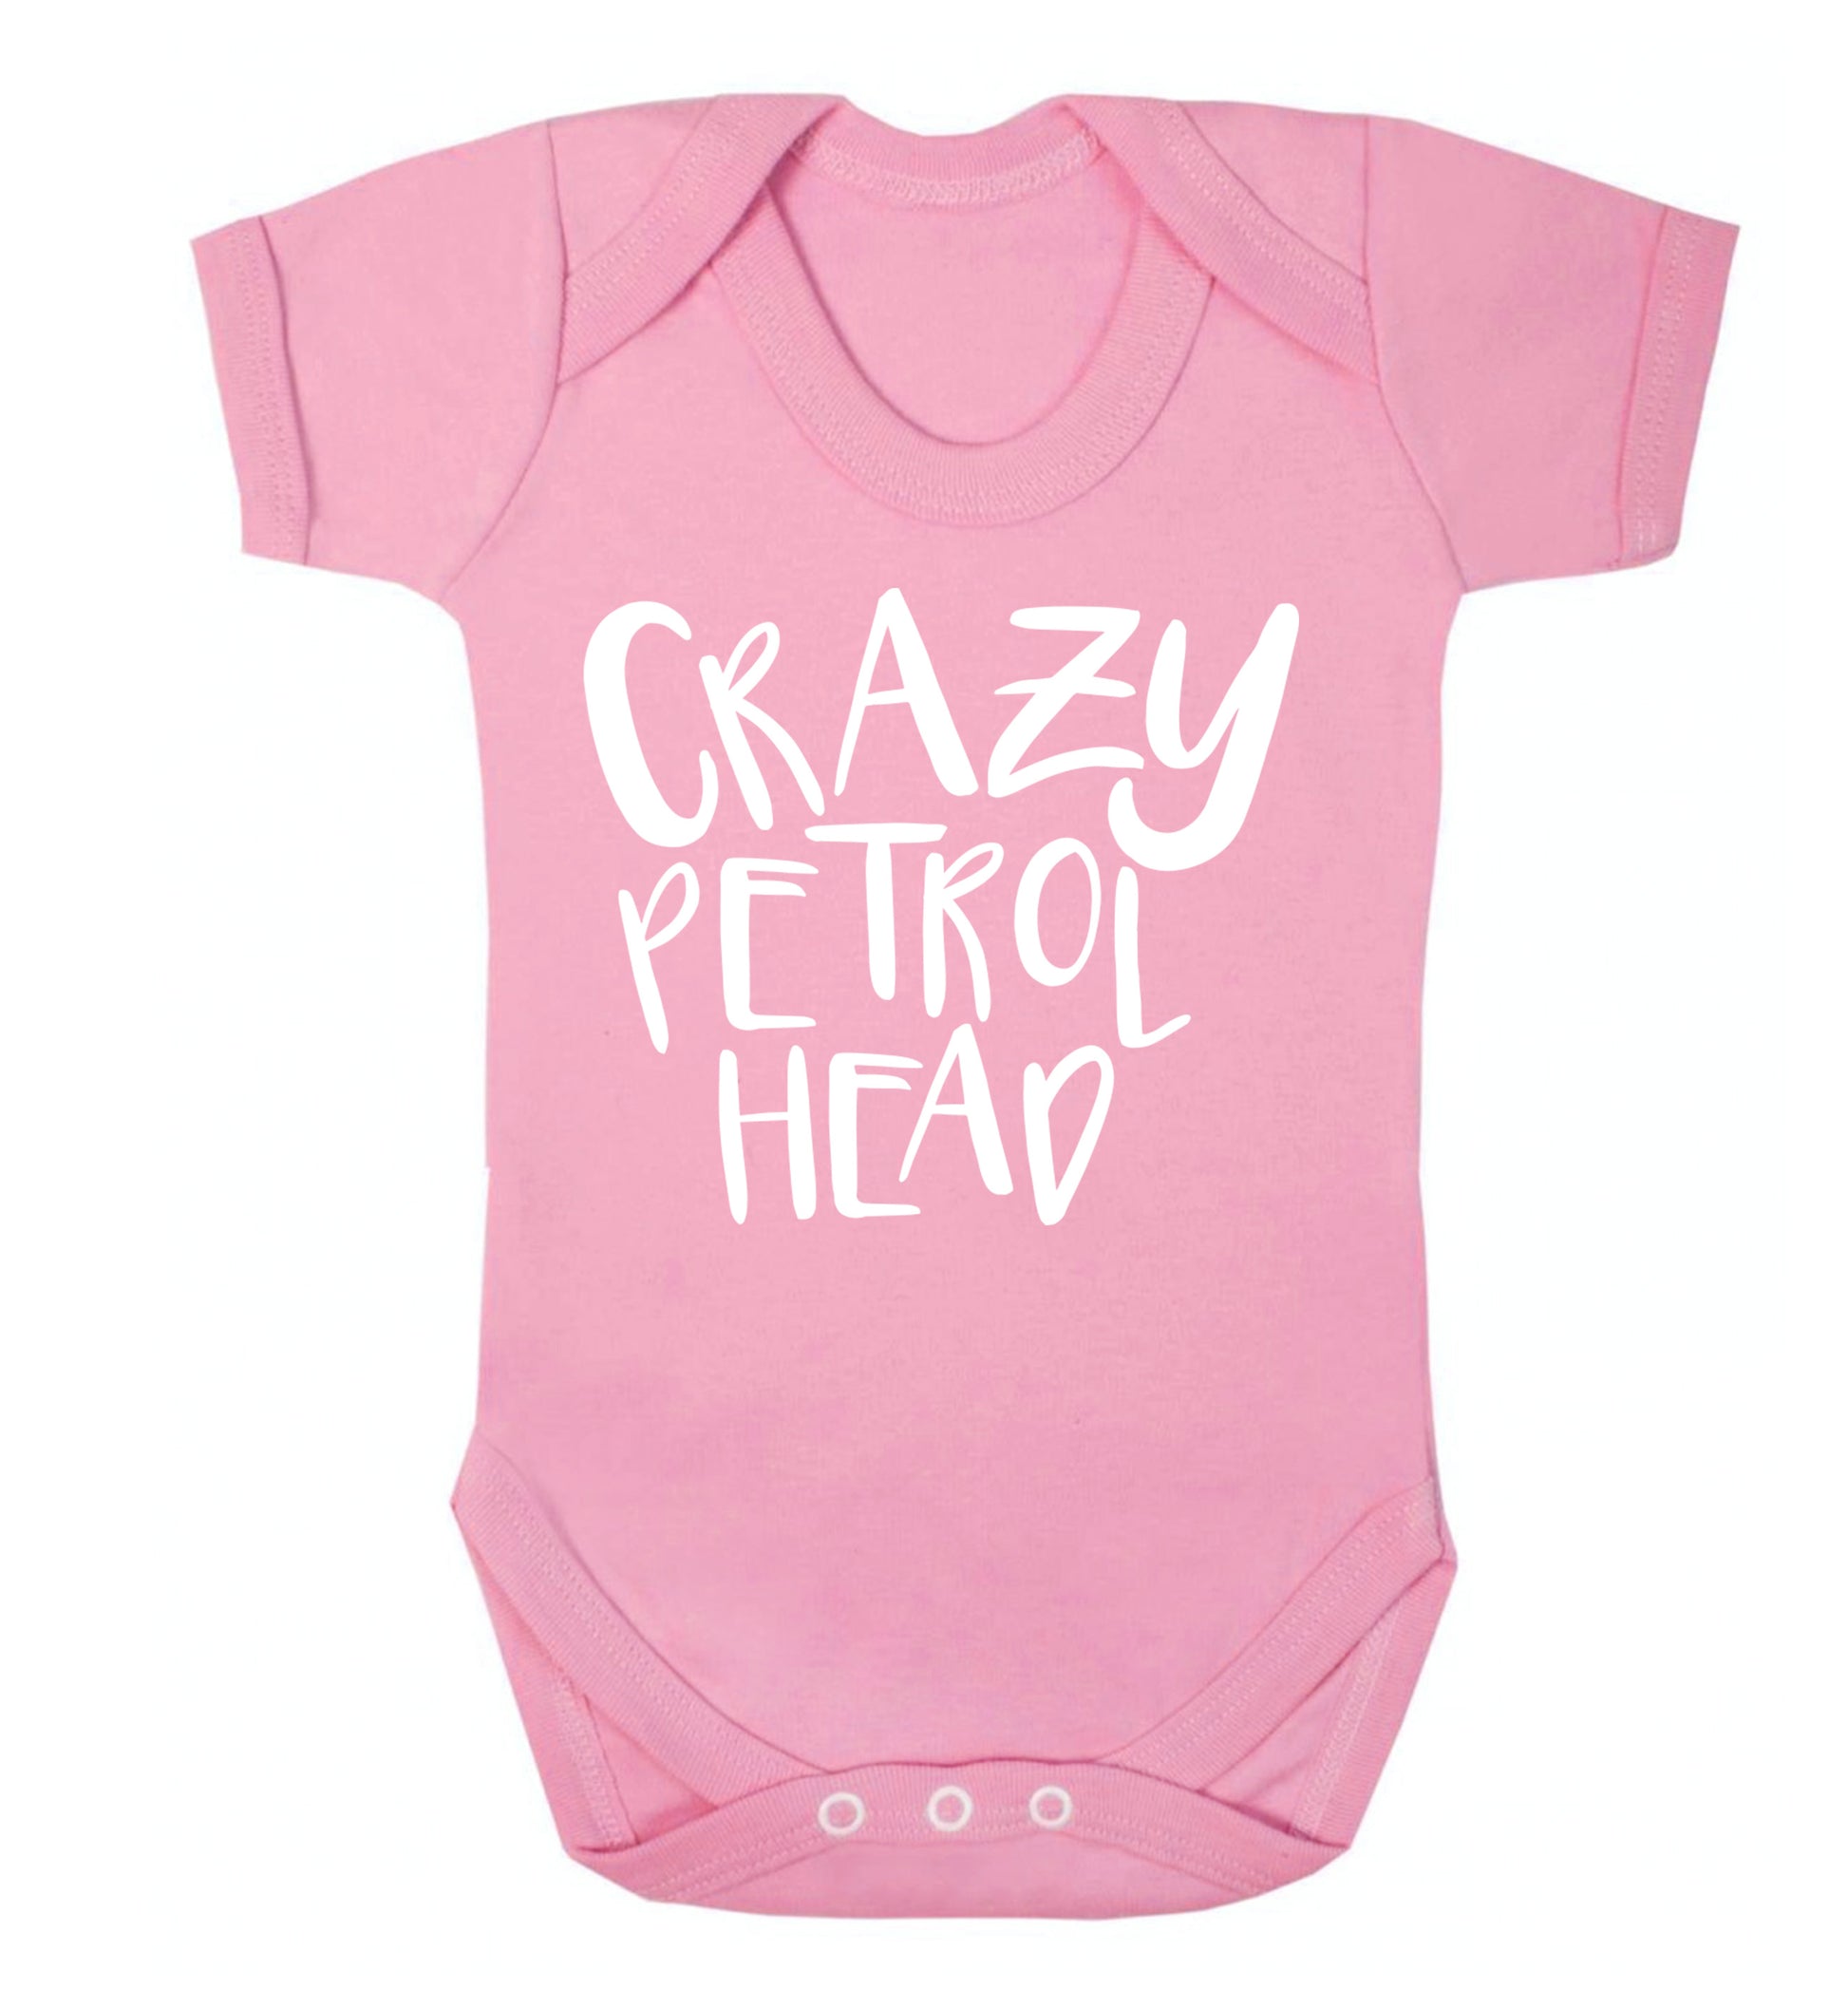 Crazy petrol head Baby Vest pale pink 18-24 months